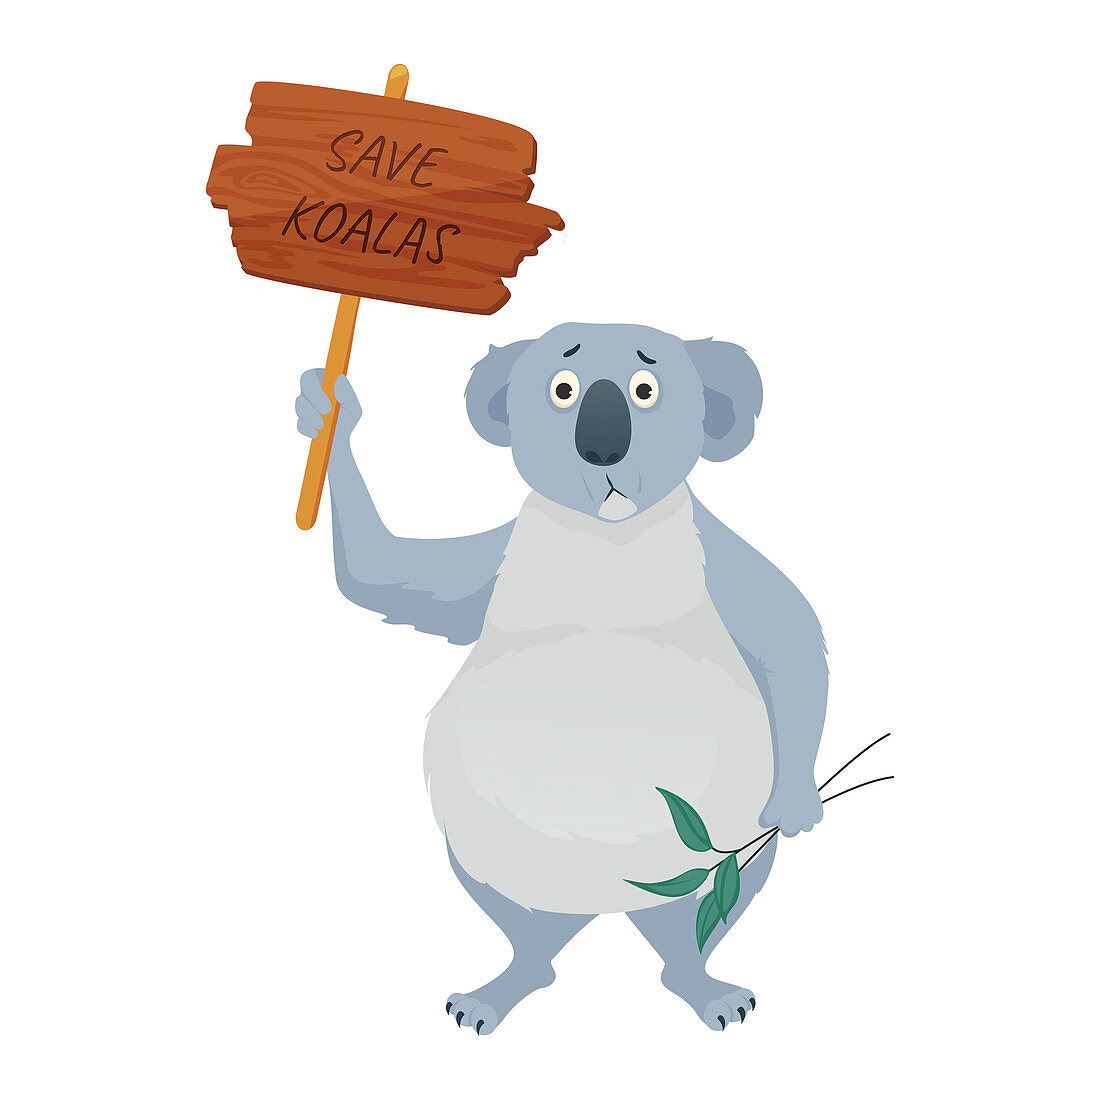 Save the koalas, conceptual illustration